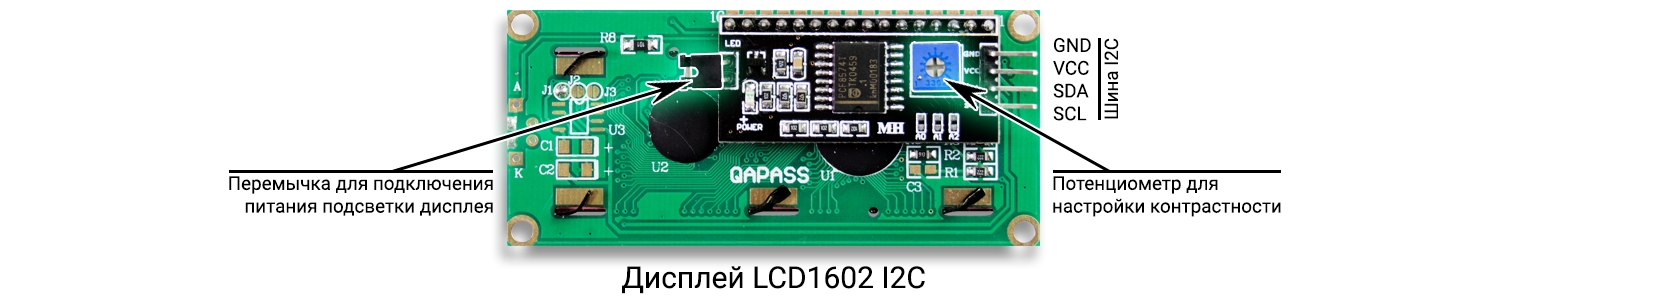 Настройка контрастности дисплея LCD1602